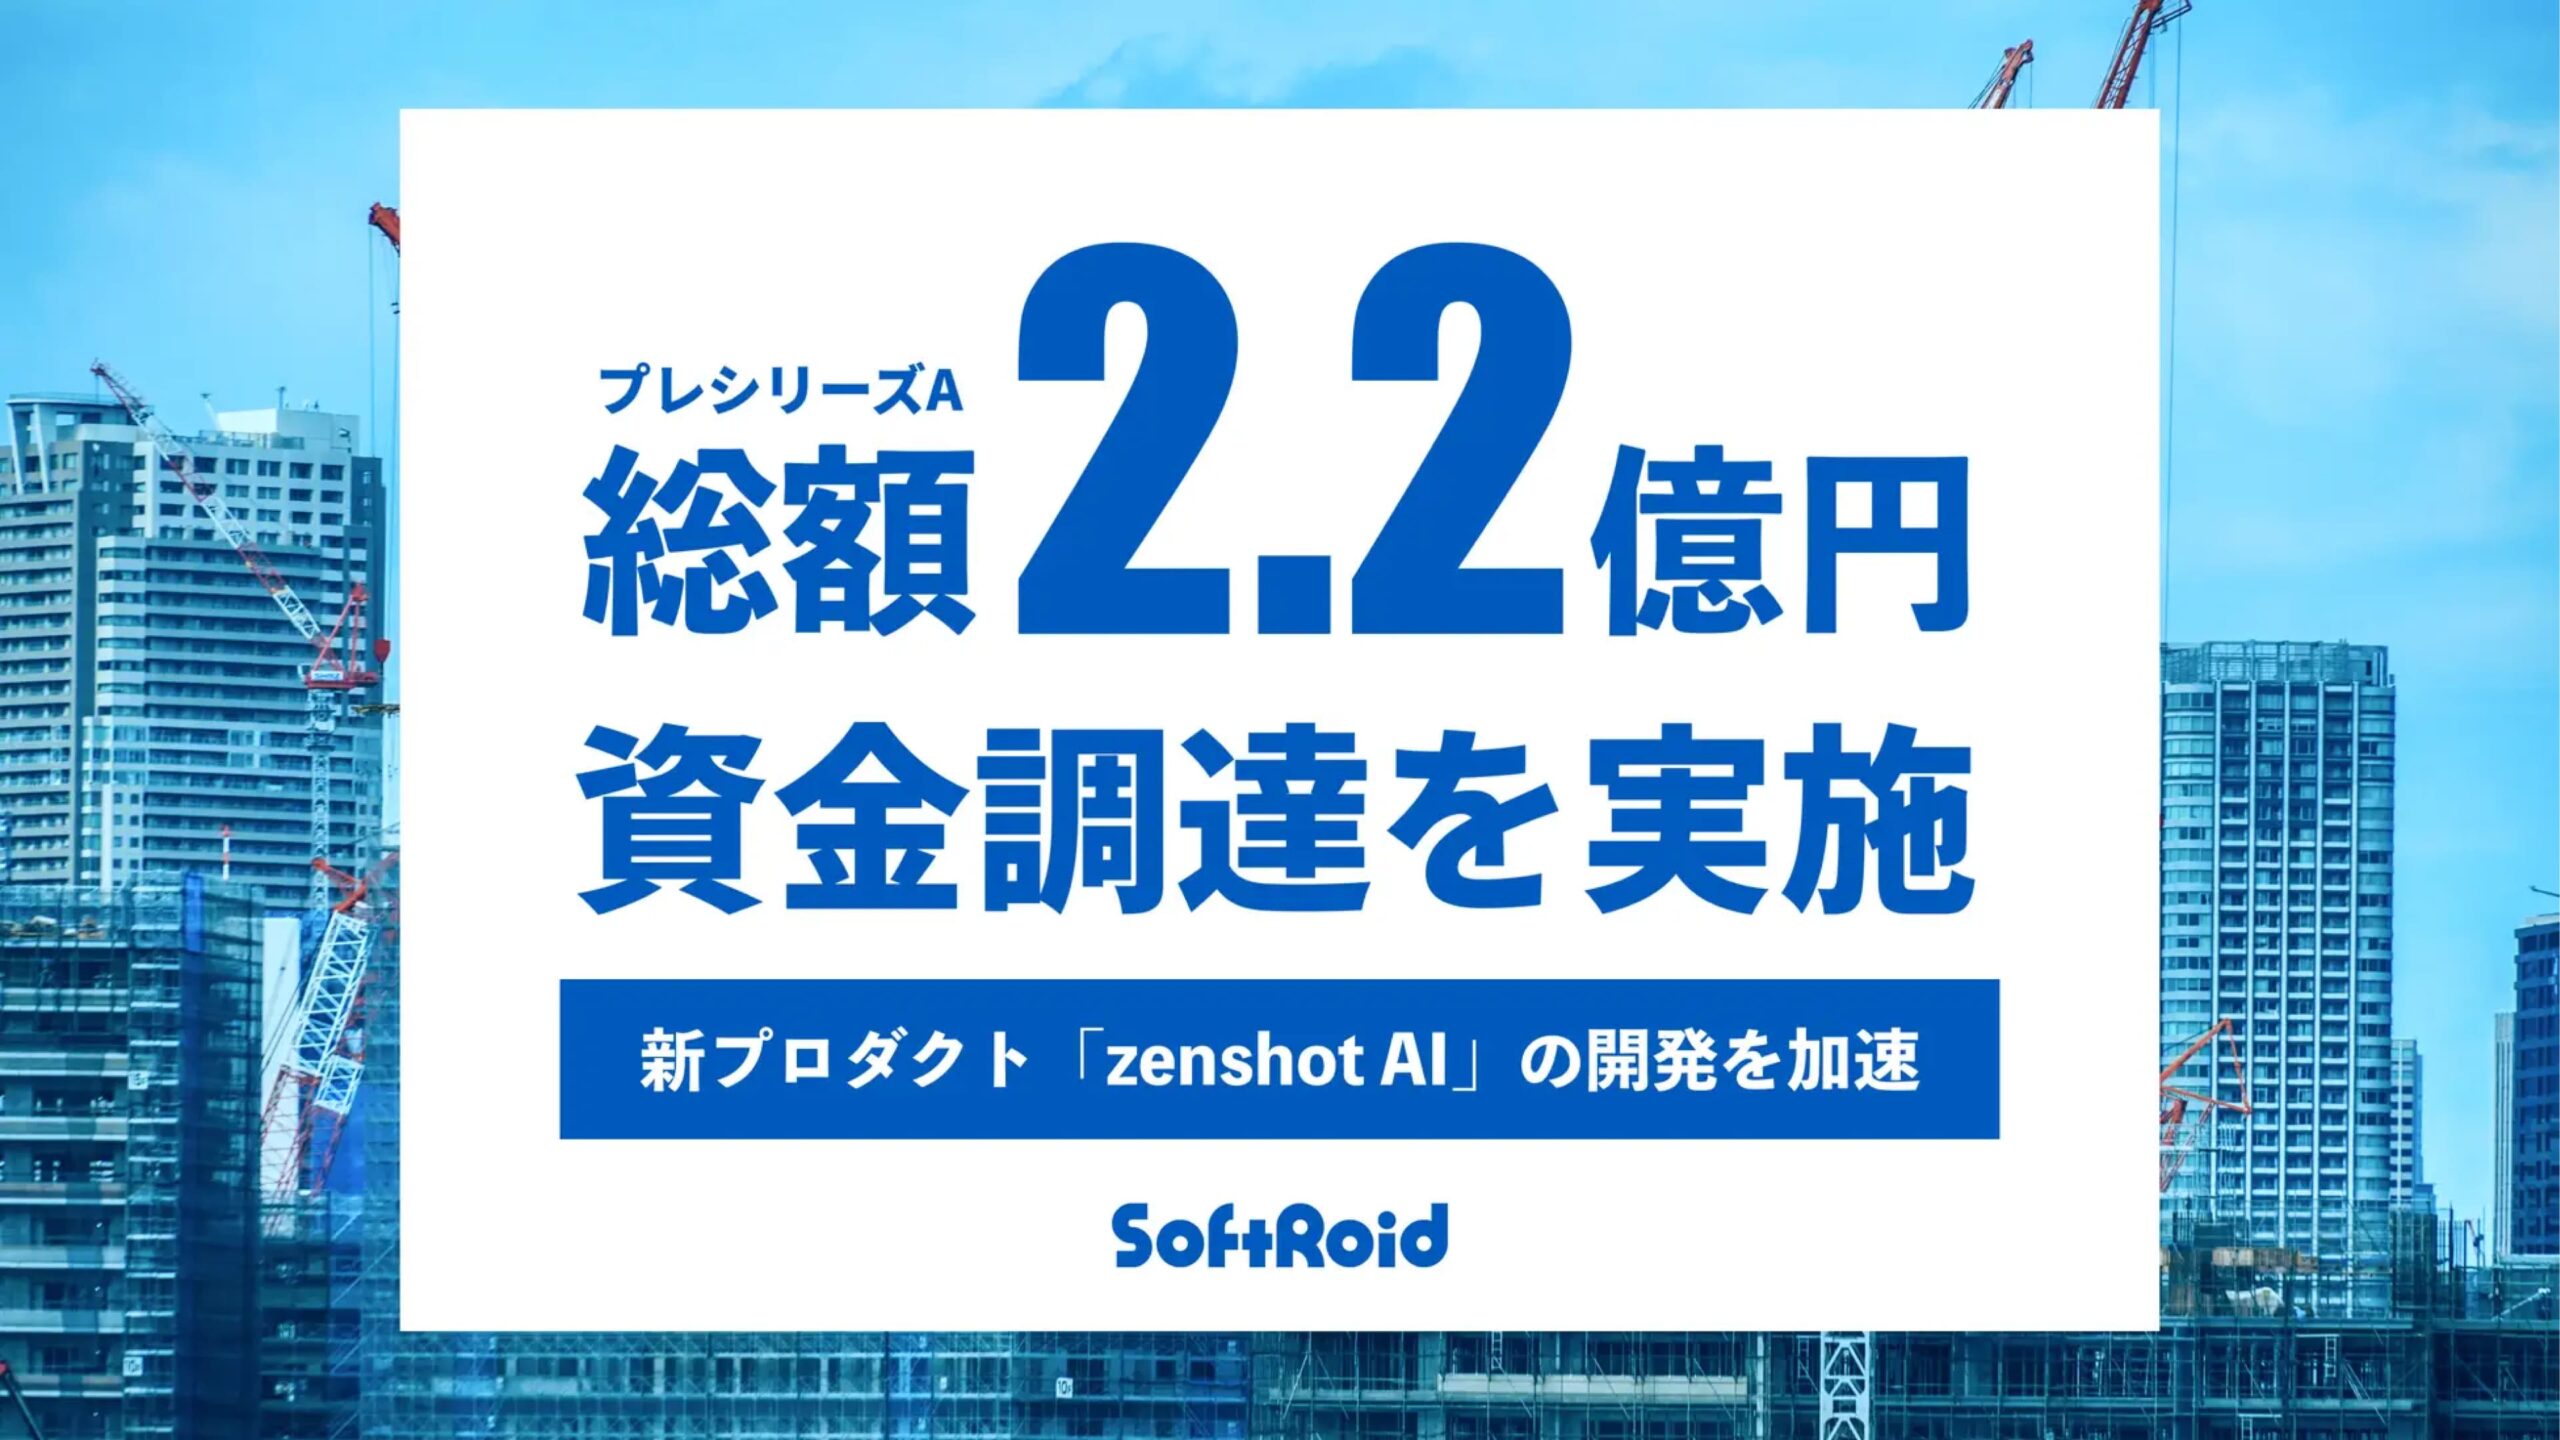 「zenshot AI」の開発をする株式会社SoftRoidがプレシリーズAにて2.2億円の資金調達